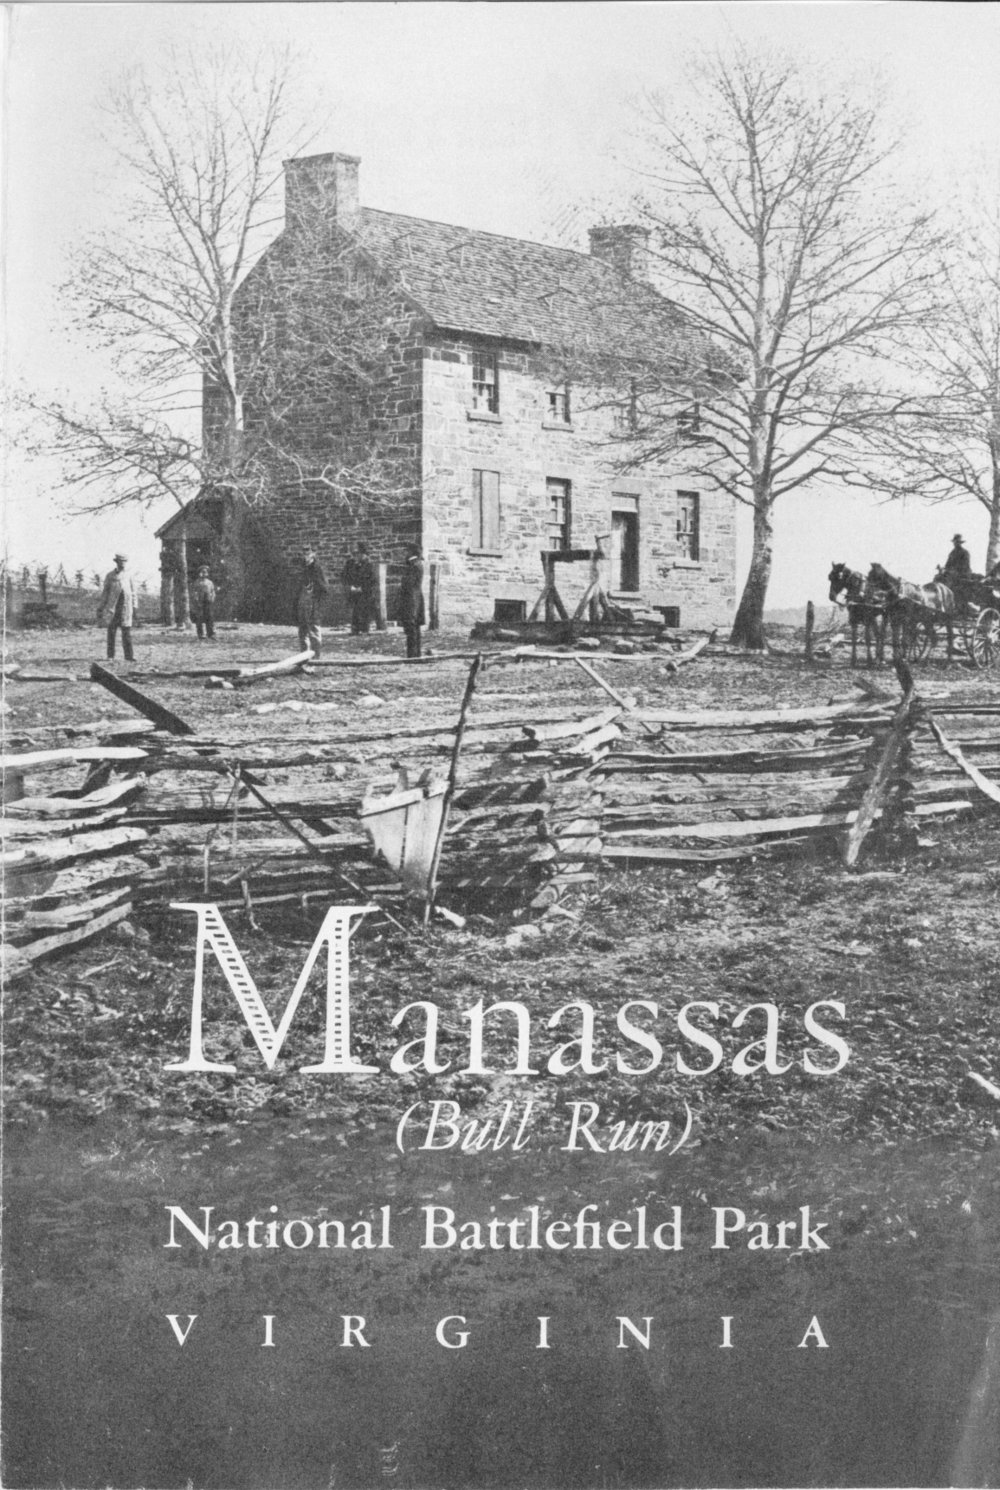 Manassas (Bull Run) National Battlefield Park [1953]